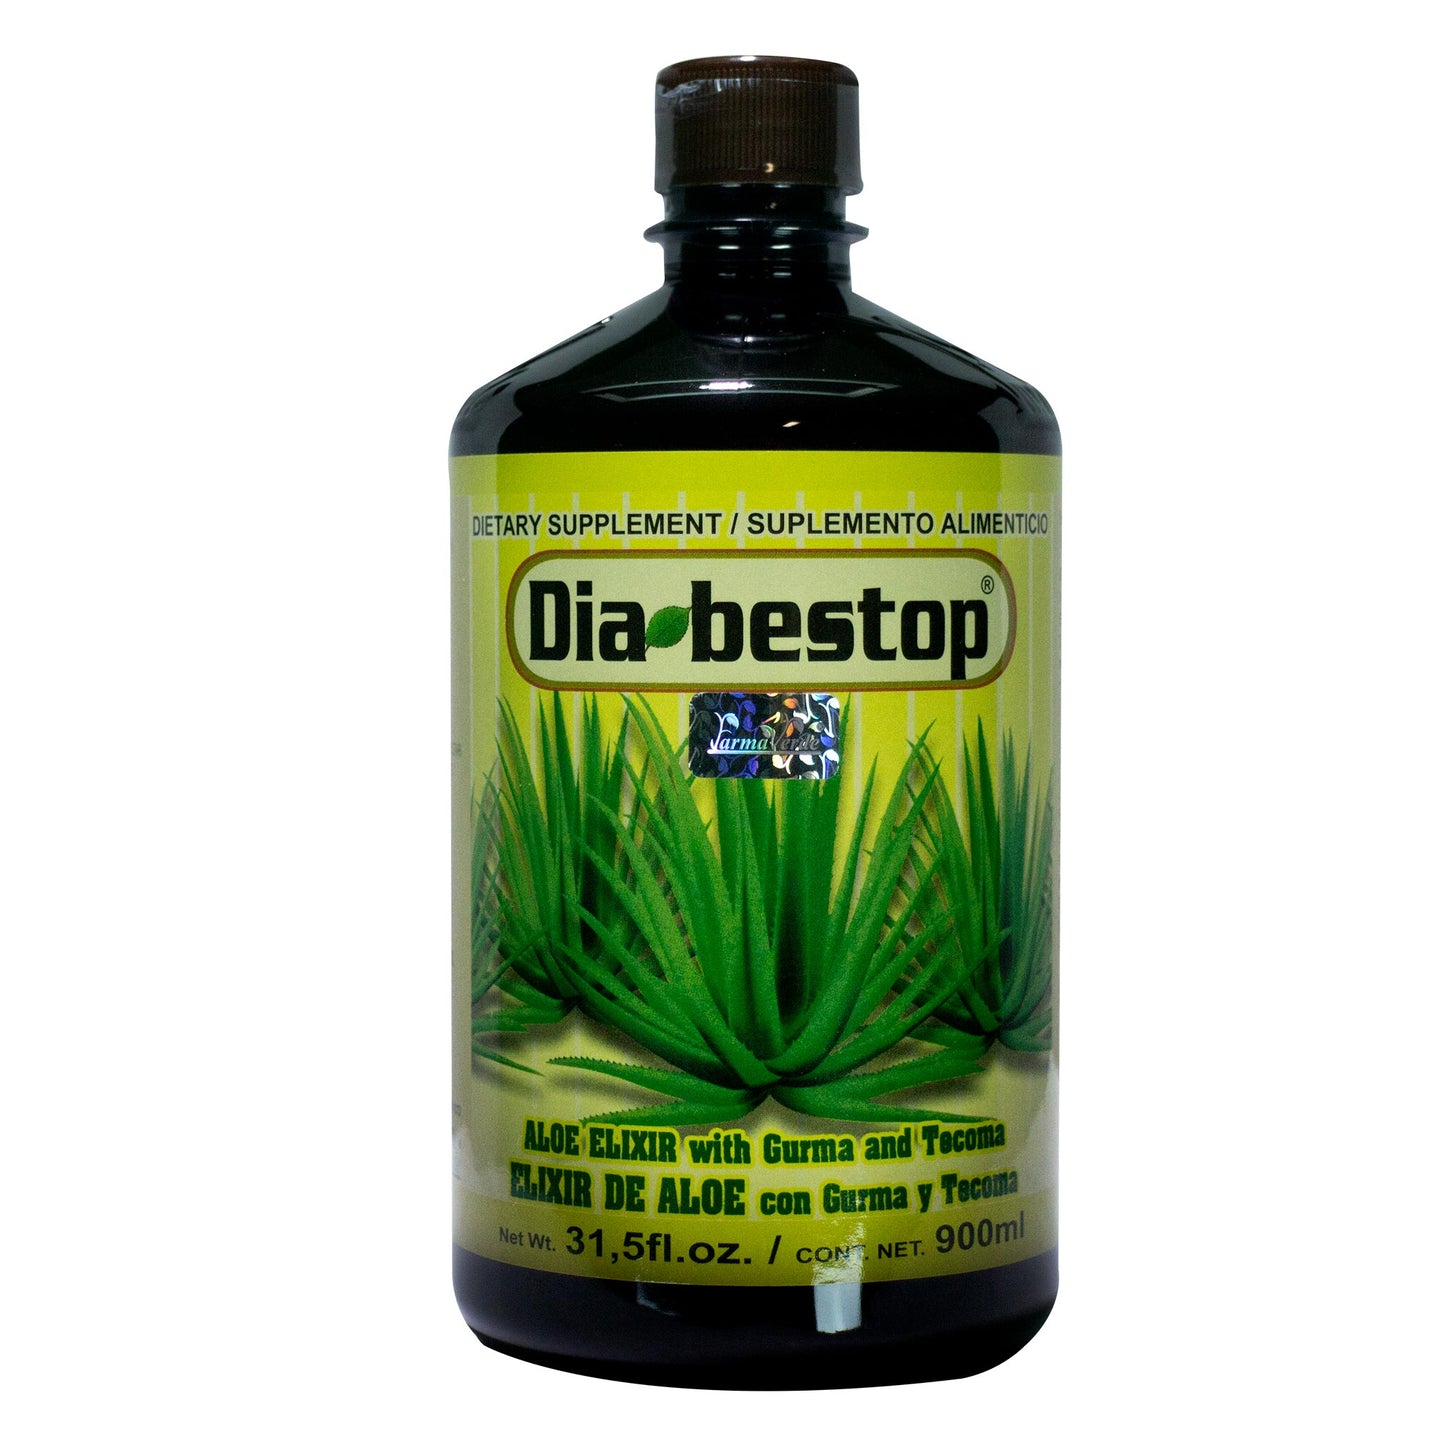 DIABESTOP ® elixir botella de 900ml